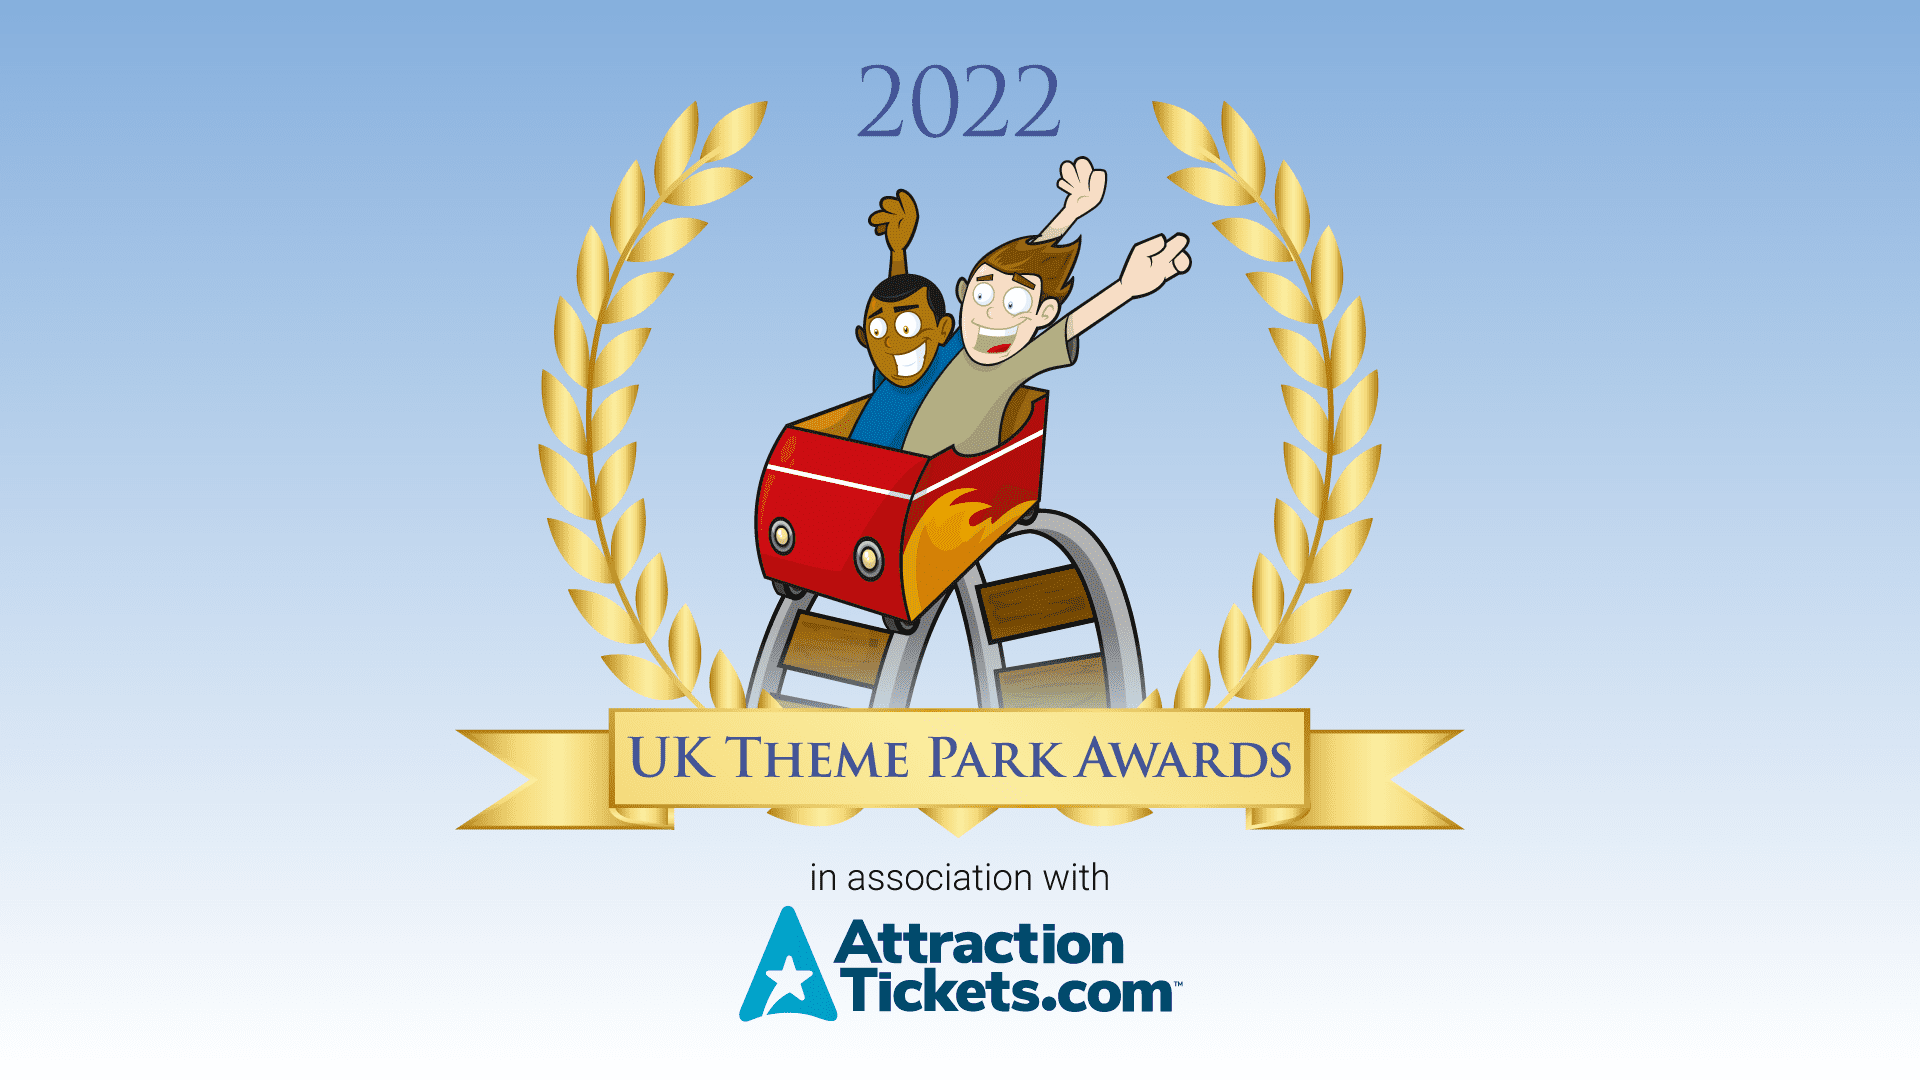 UK Theme Park Awards 2022 16 9